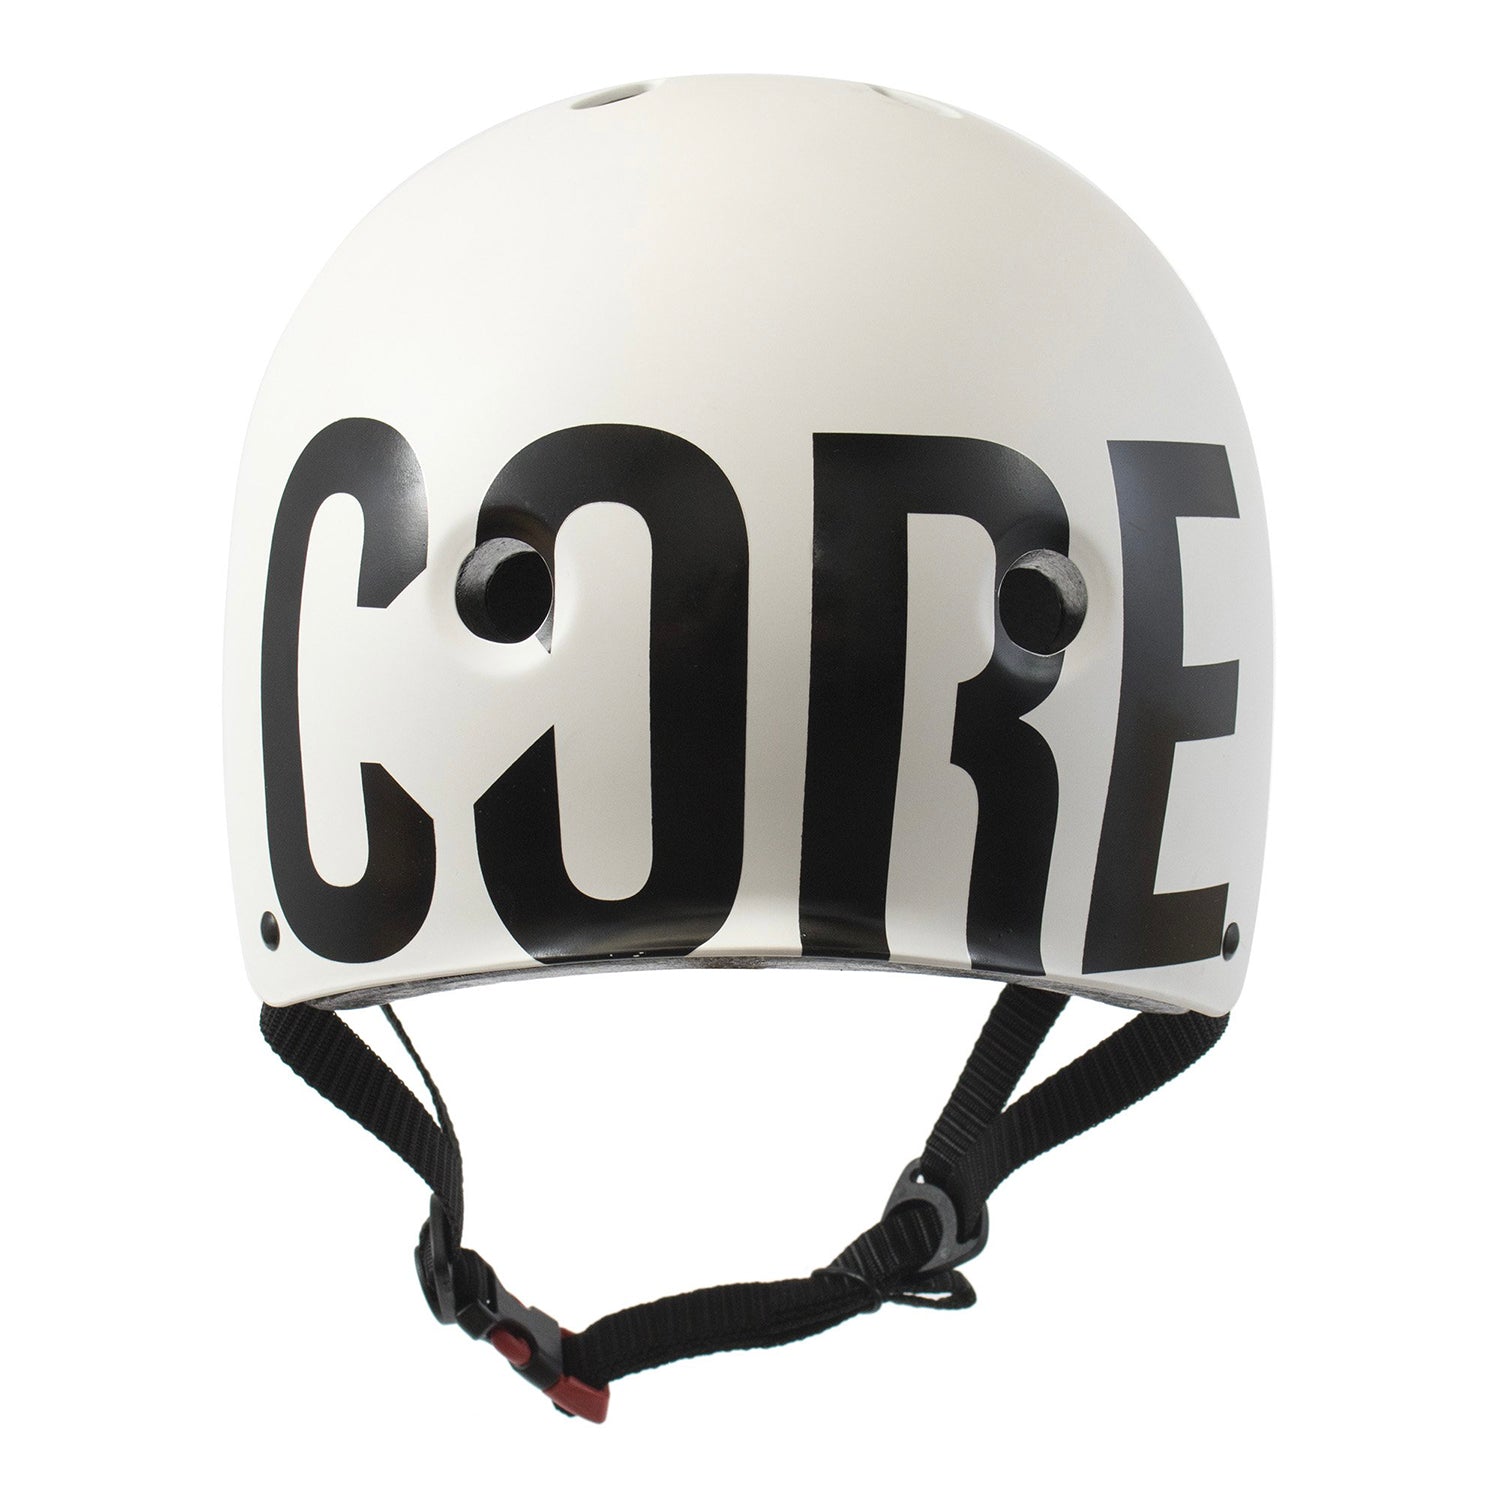 CORE Street Helmet - White - Prime Delux Store